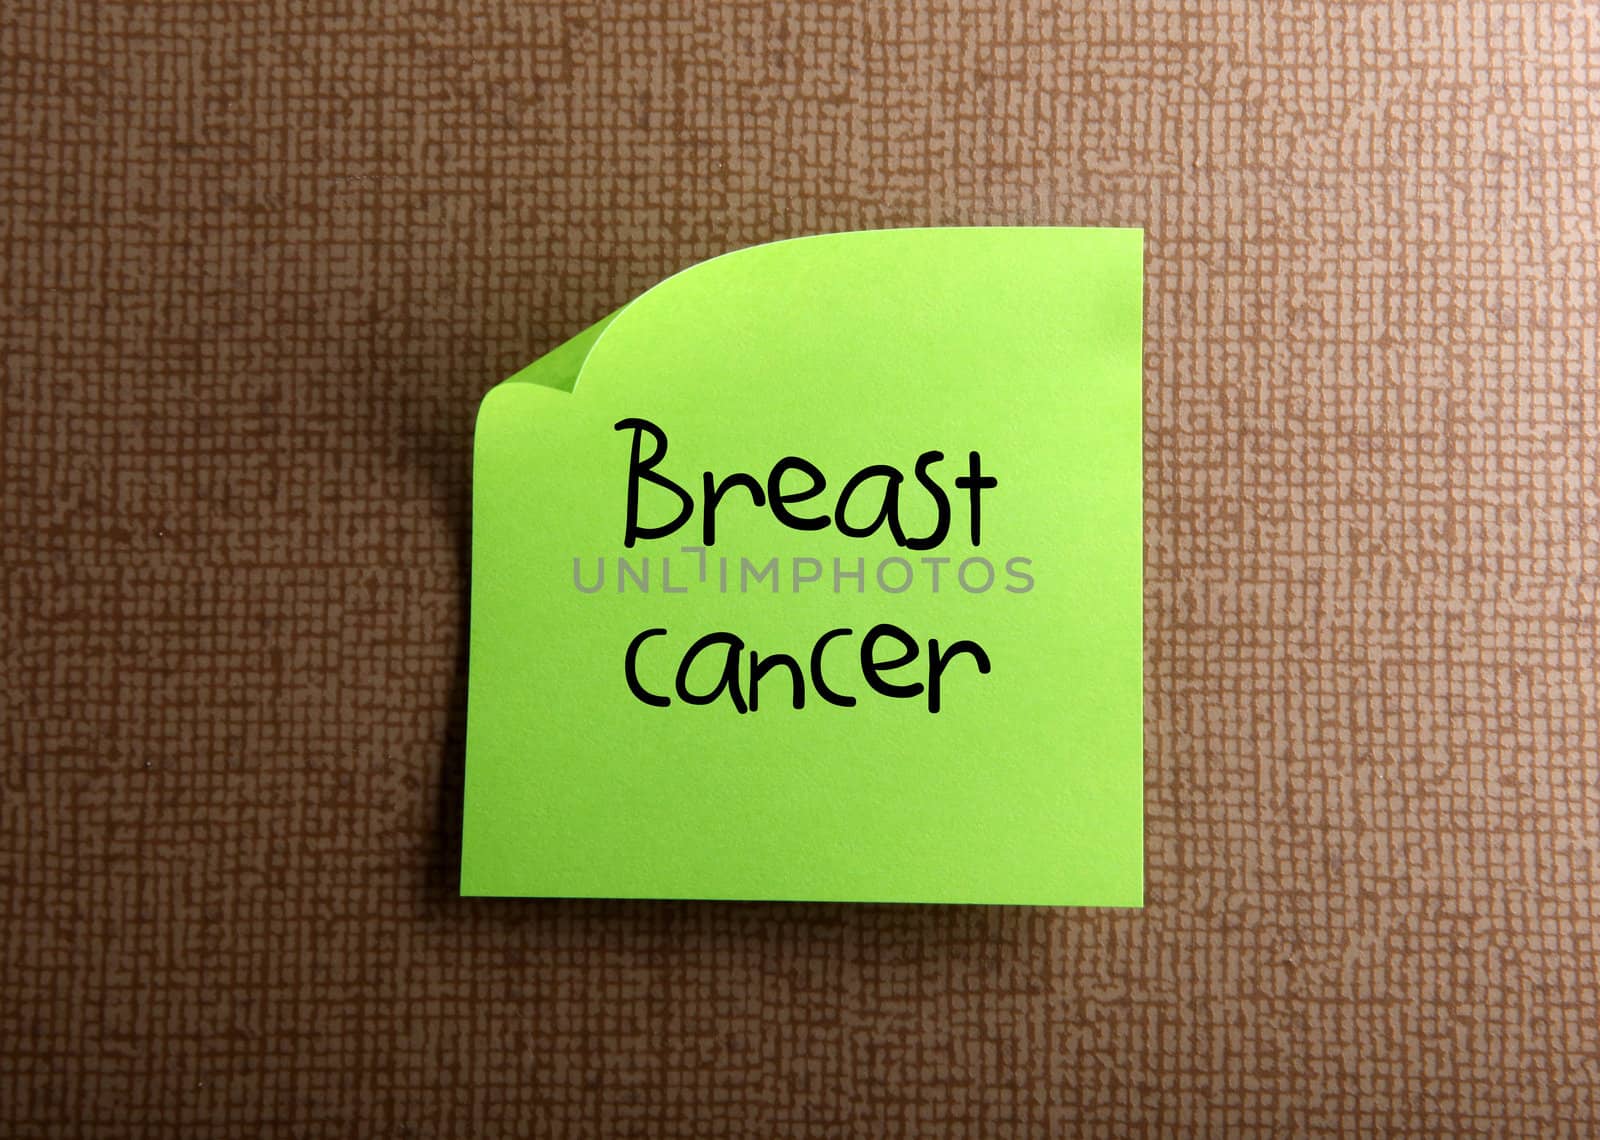 Breast cancer by nenov